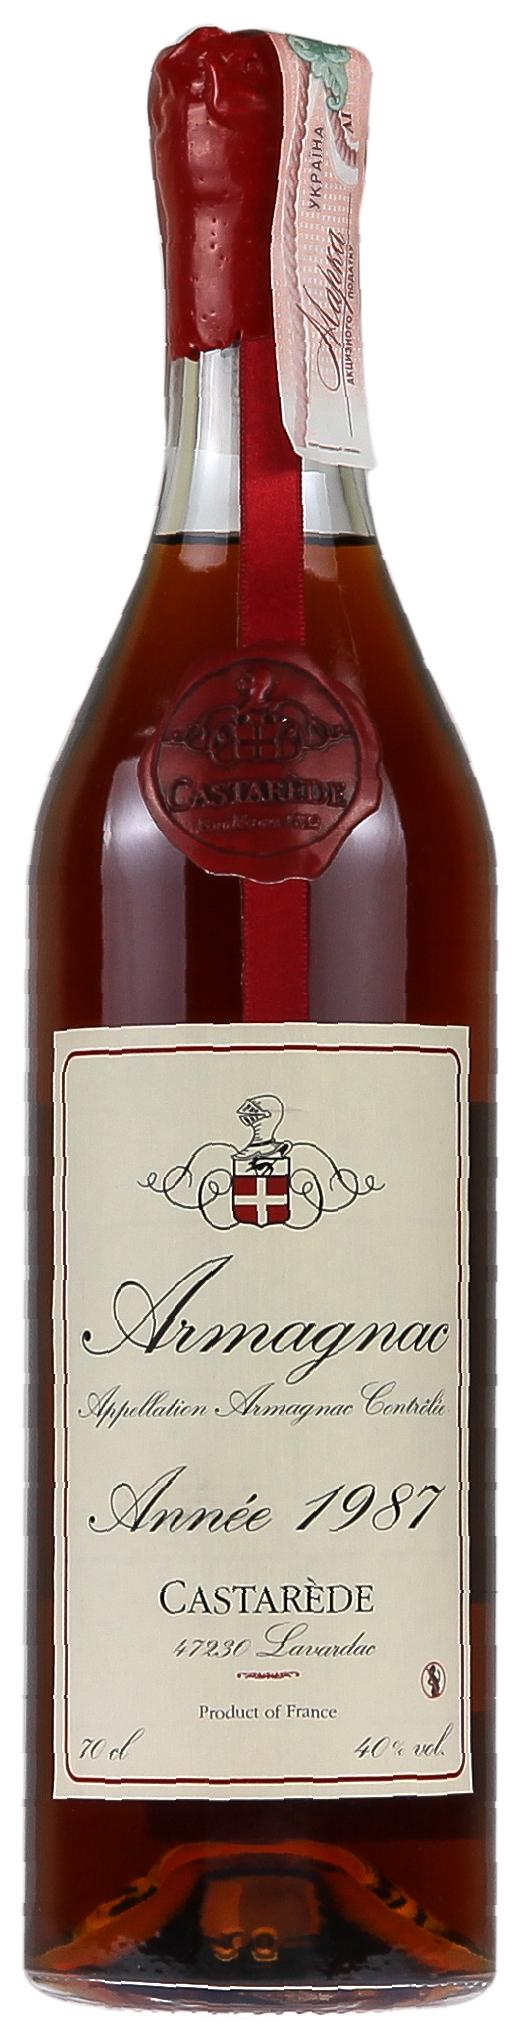 Armagnac Castarede 1987 - 3